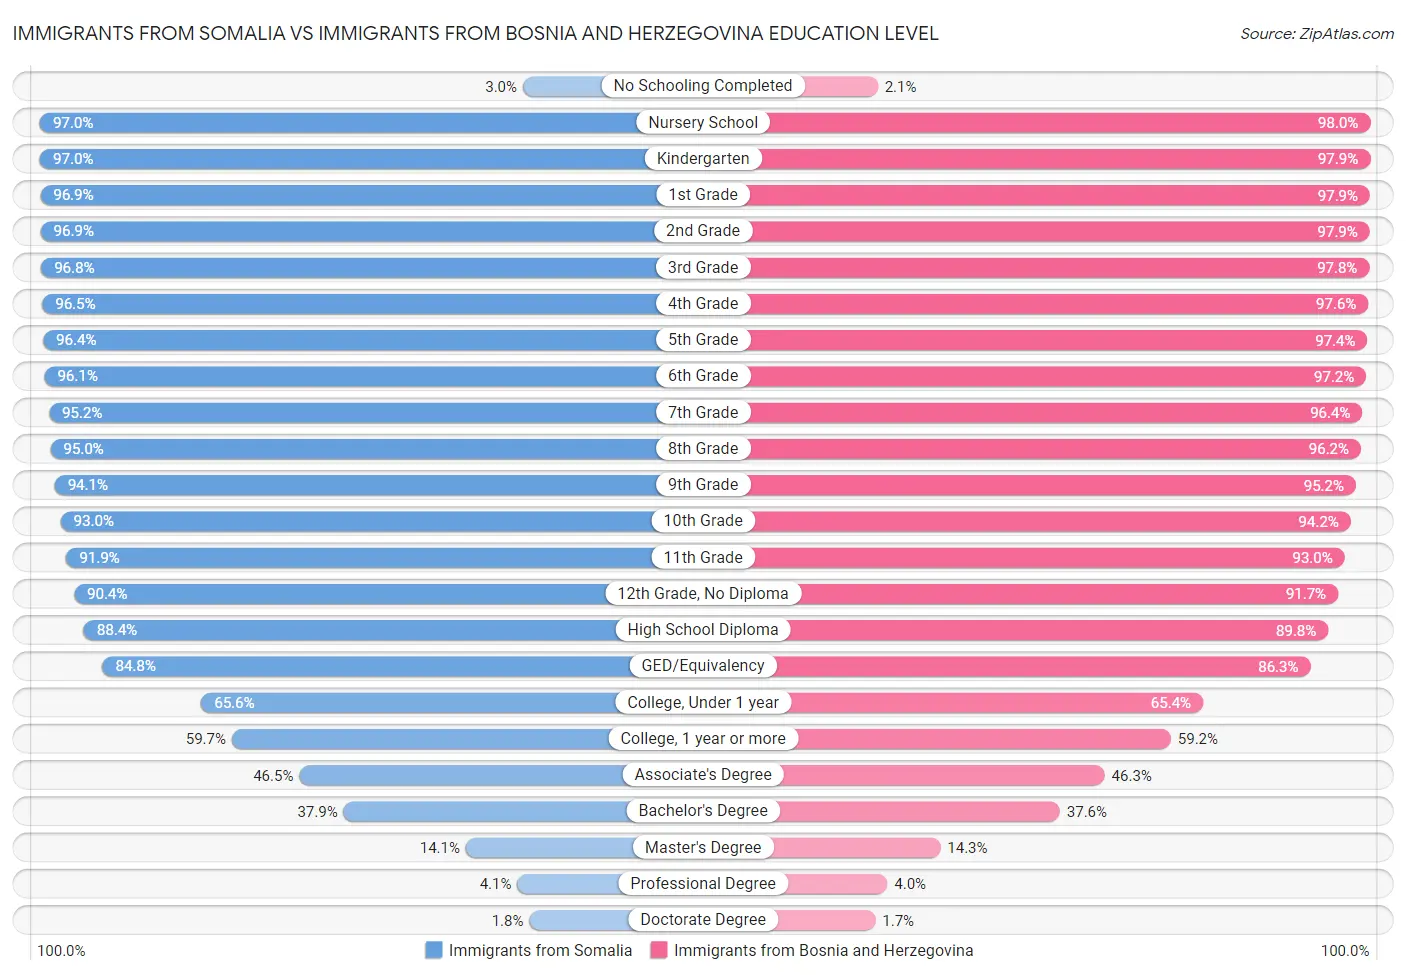 Immigrants from Somalia vs Immigrants from Bosnia and Herzegovina Education Level